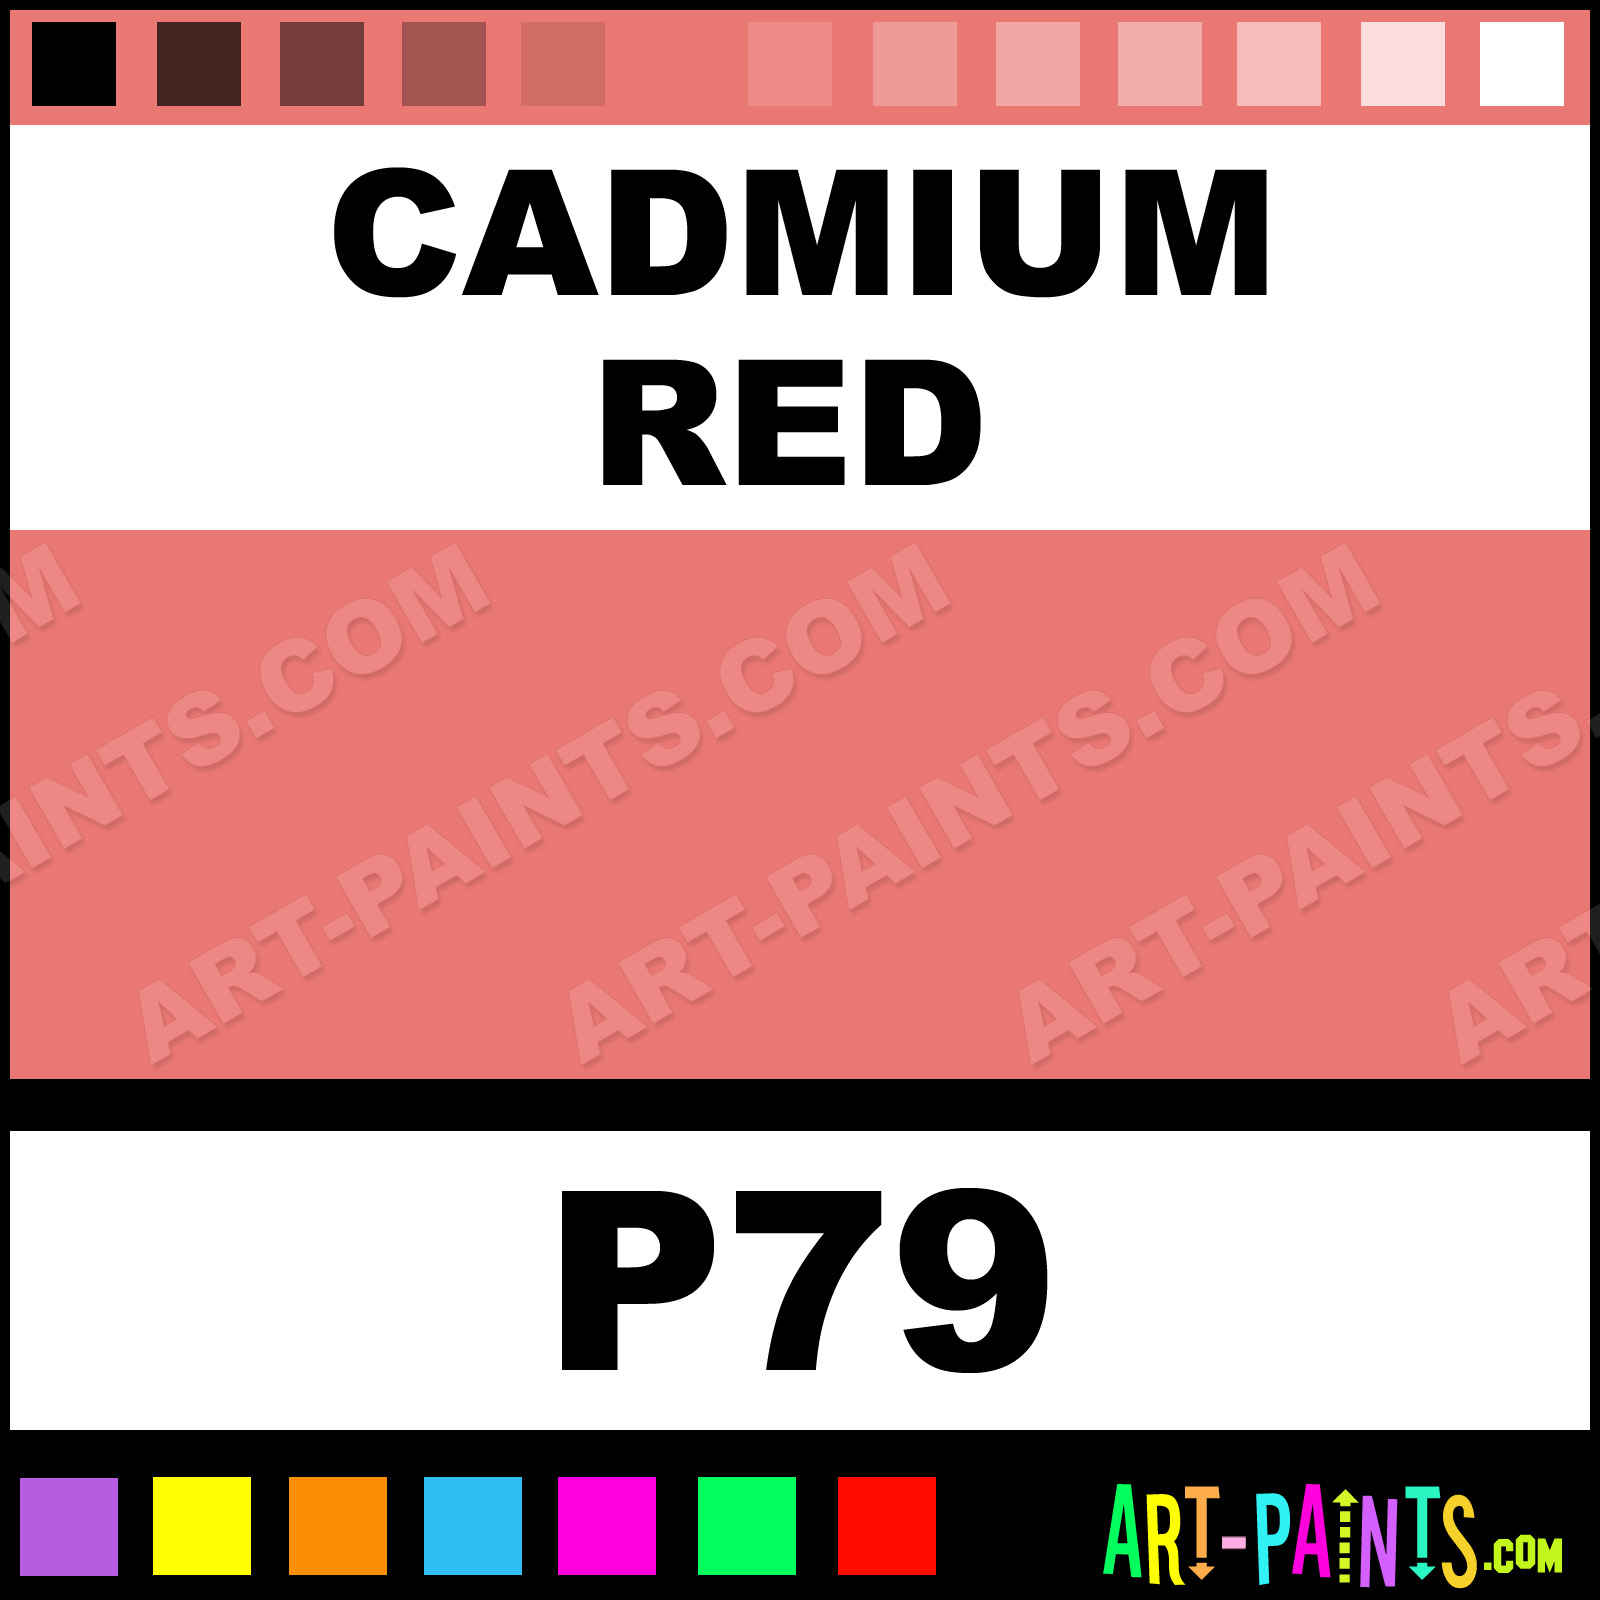 INC CHARTPAK P79 AD MARKER CADMIUM RED